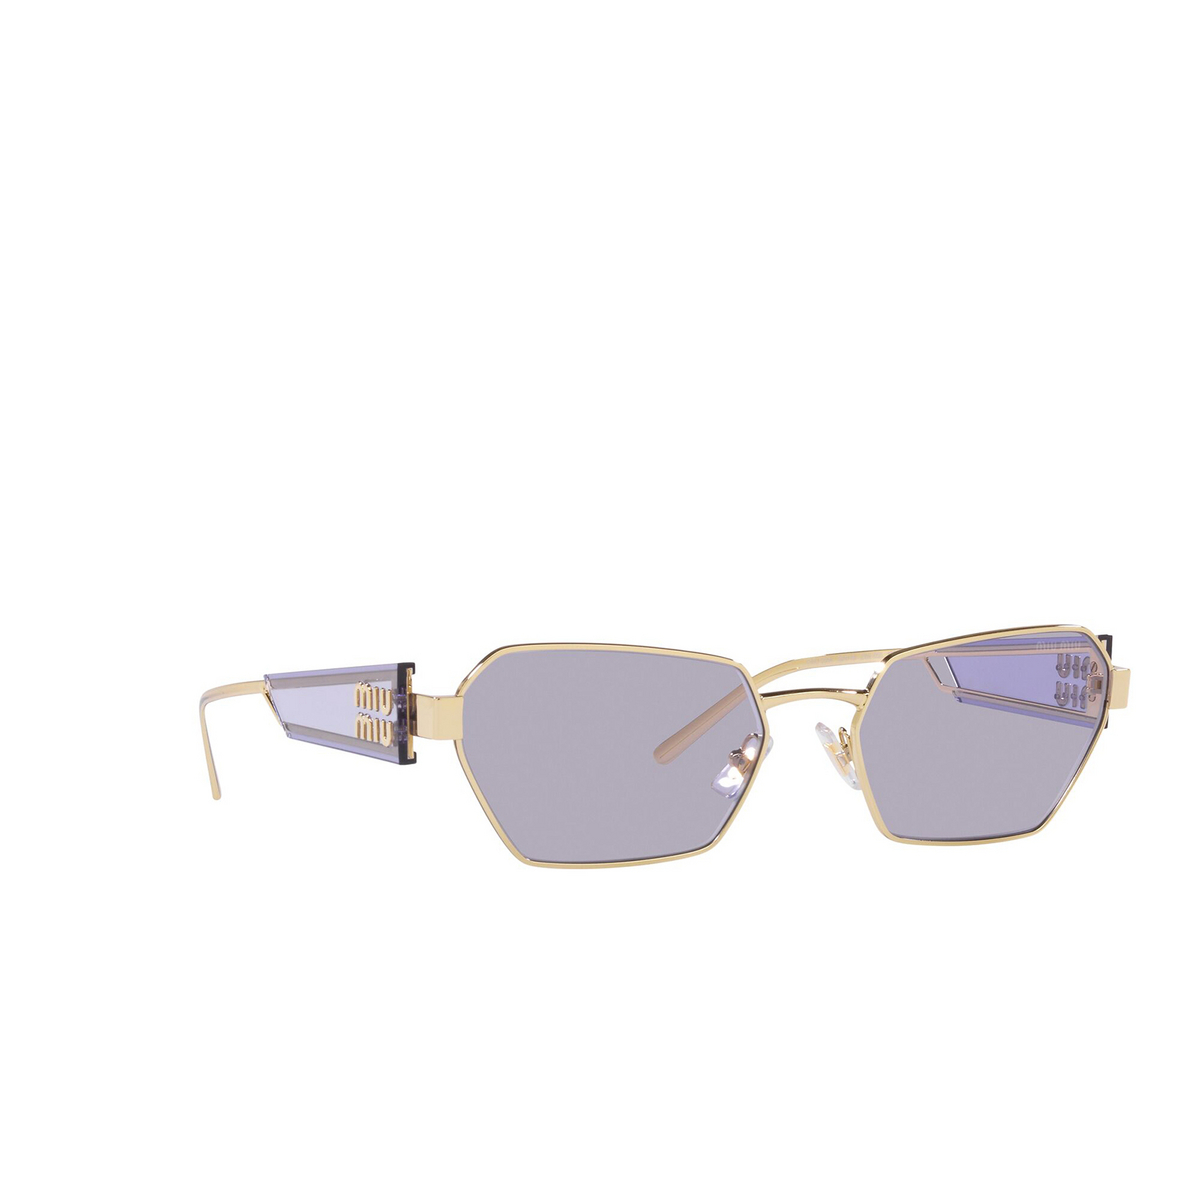 Miu Miu® Irregular Sunglasses: MU 53WS color Pale Gold ZVN05S - three-quarters view.